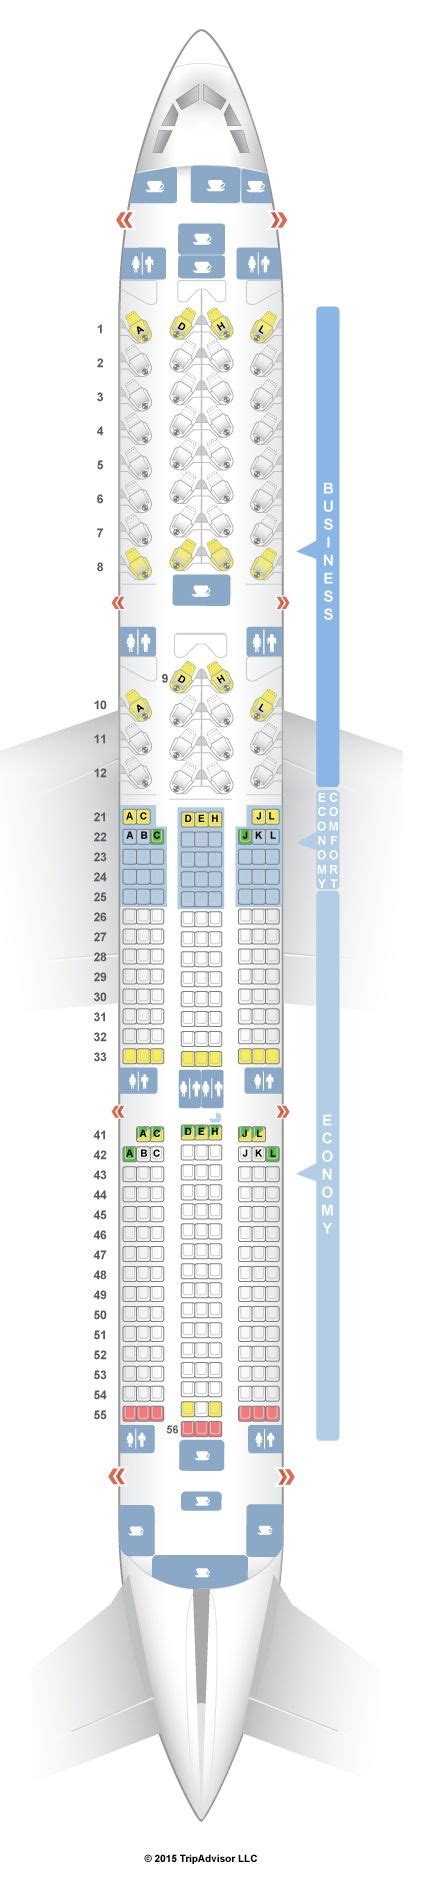 Seatguru Seat Map Finnair Airbus A350 900 350 Seatguru Airbus